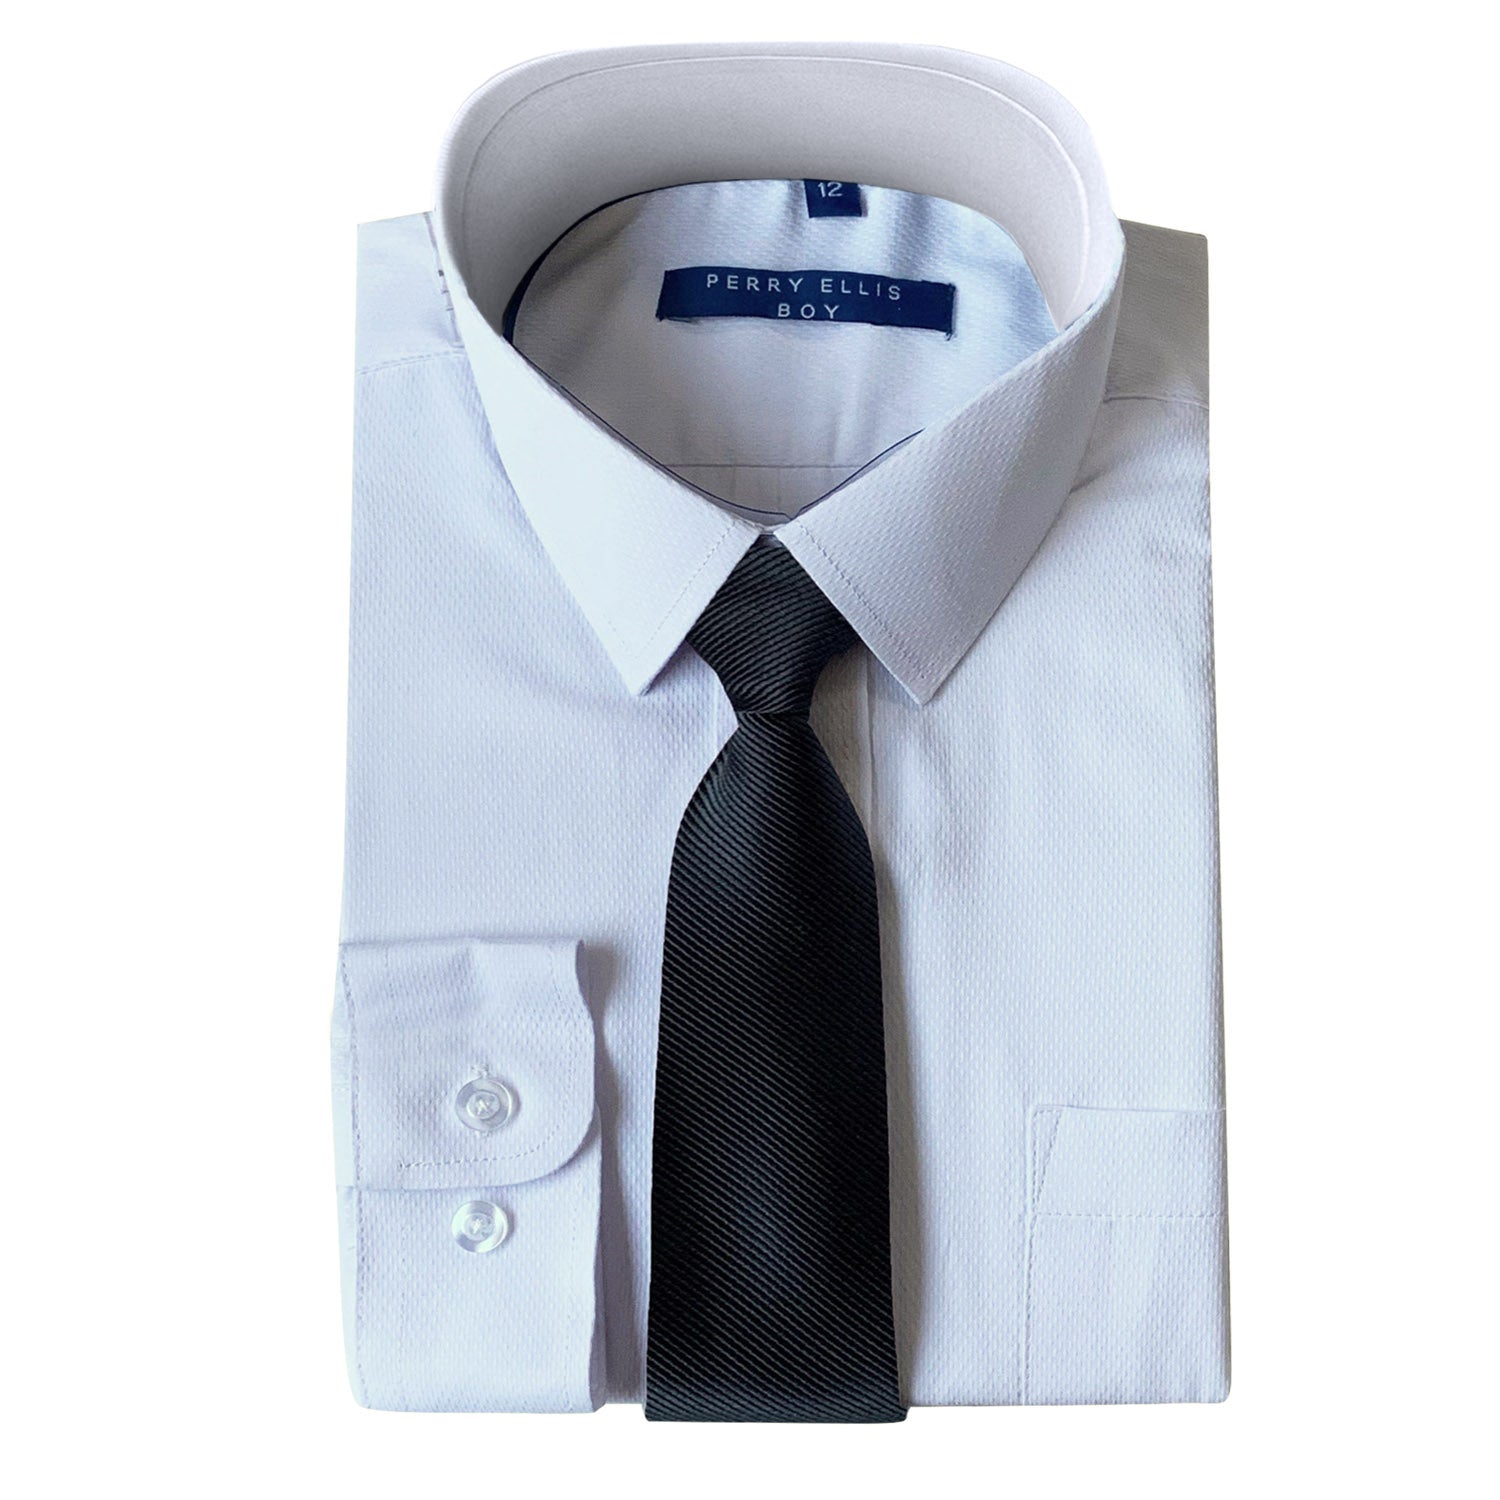 Perry Ellis Boys Dress Shirts w Mid Grey Tie Solid Shirts w Colored Tie